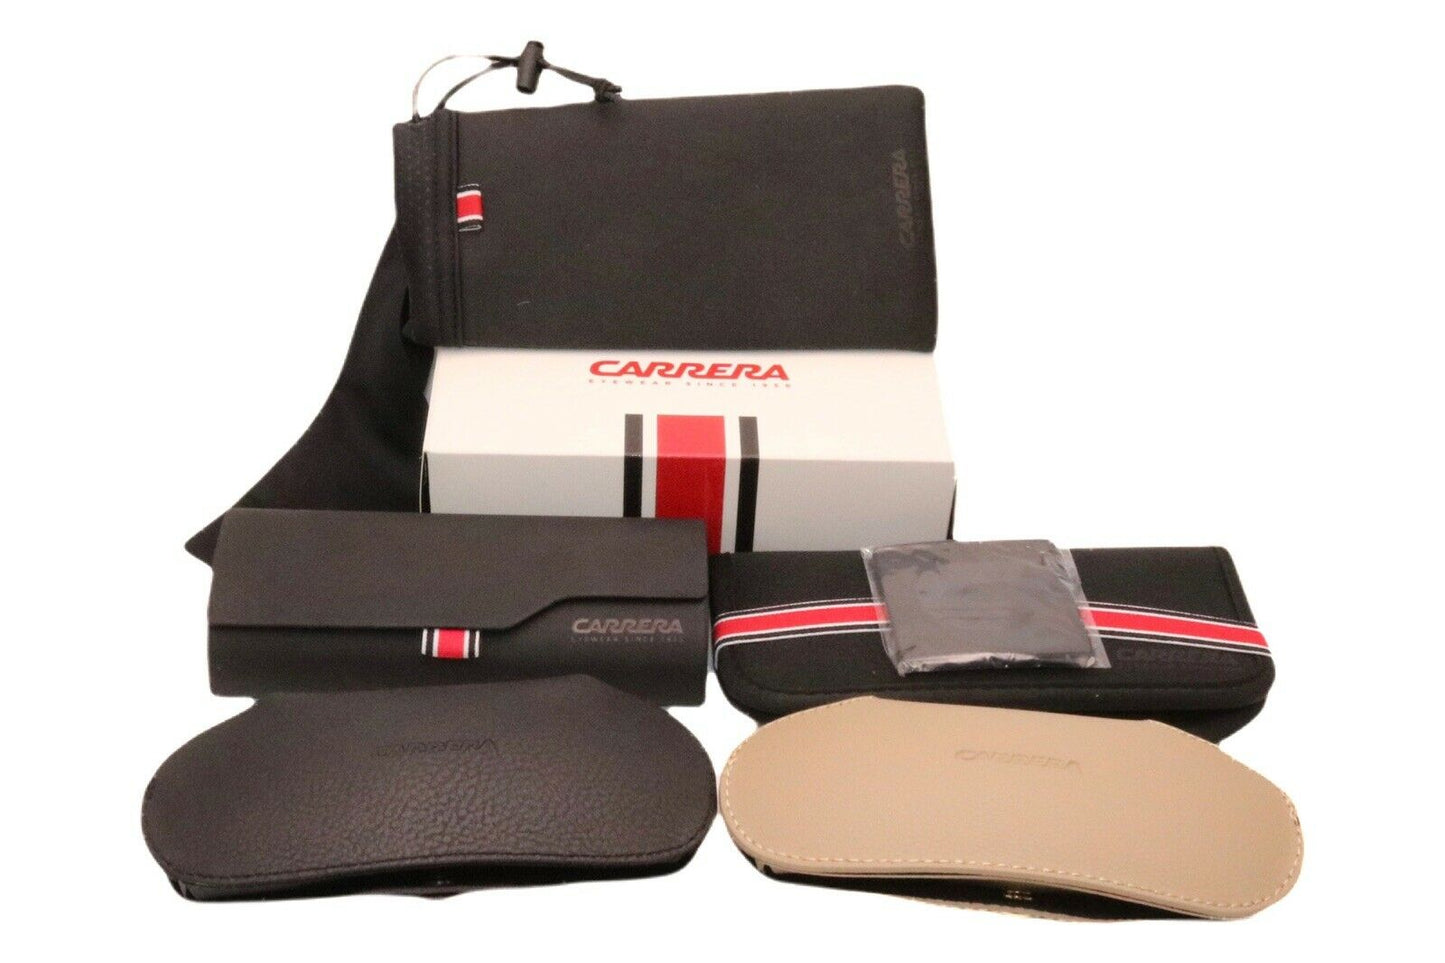 Carrera 8035/S-0807 9O 61mm New Sunglasses